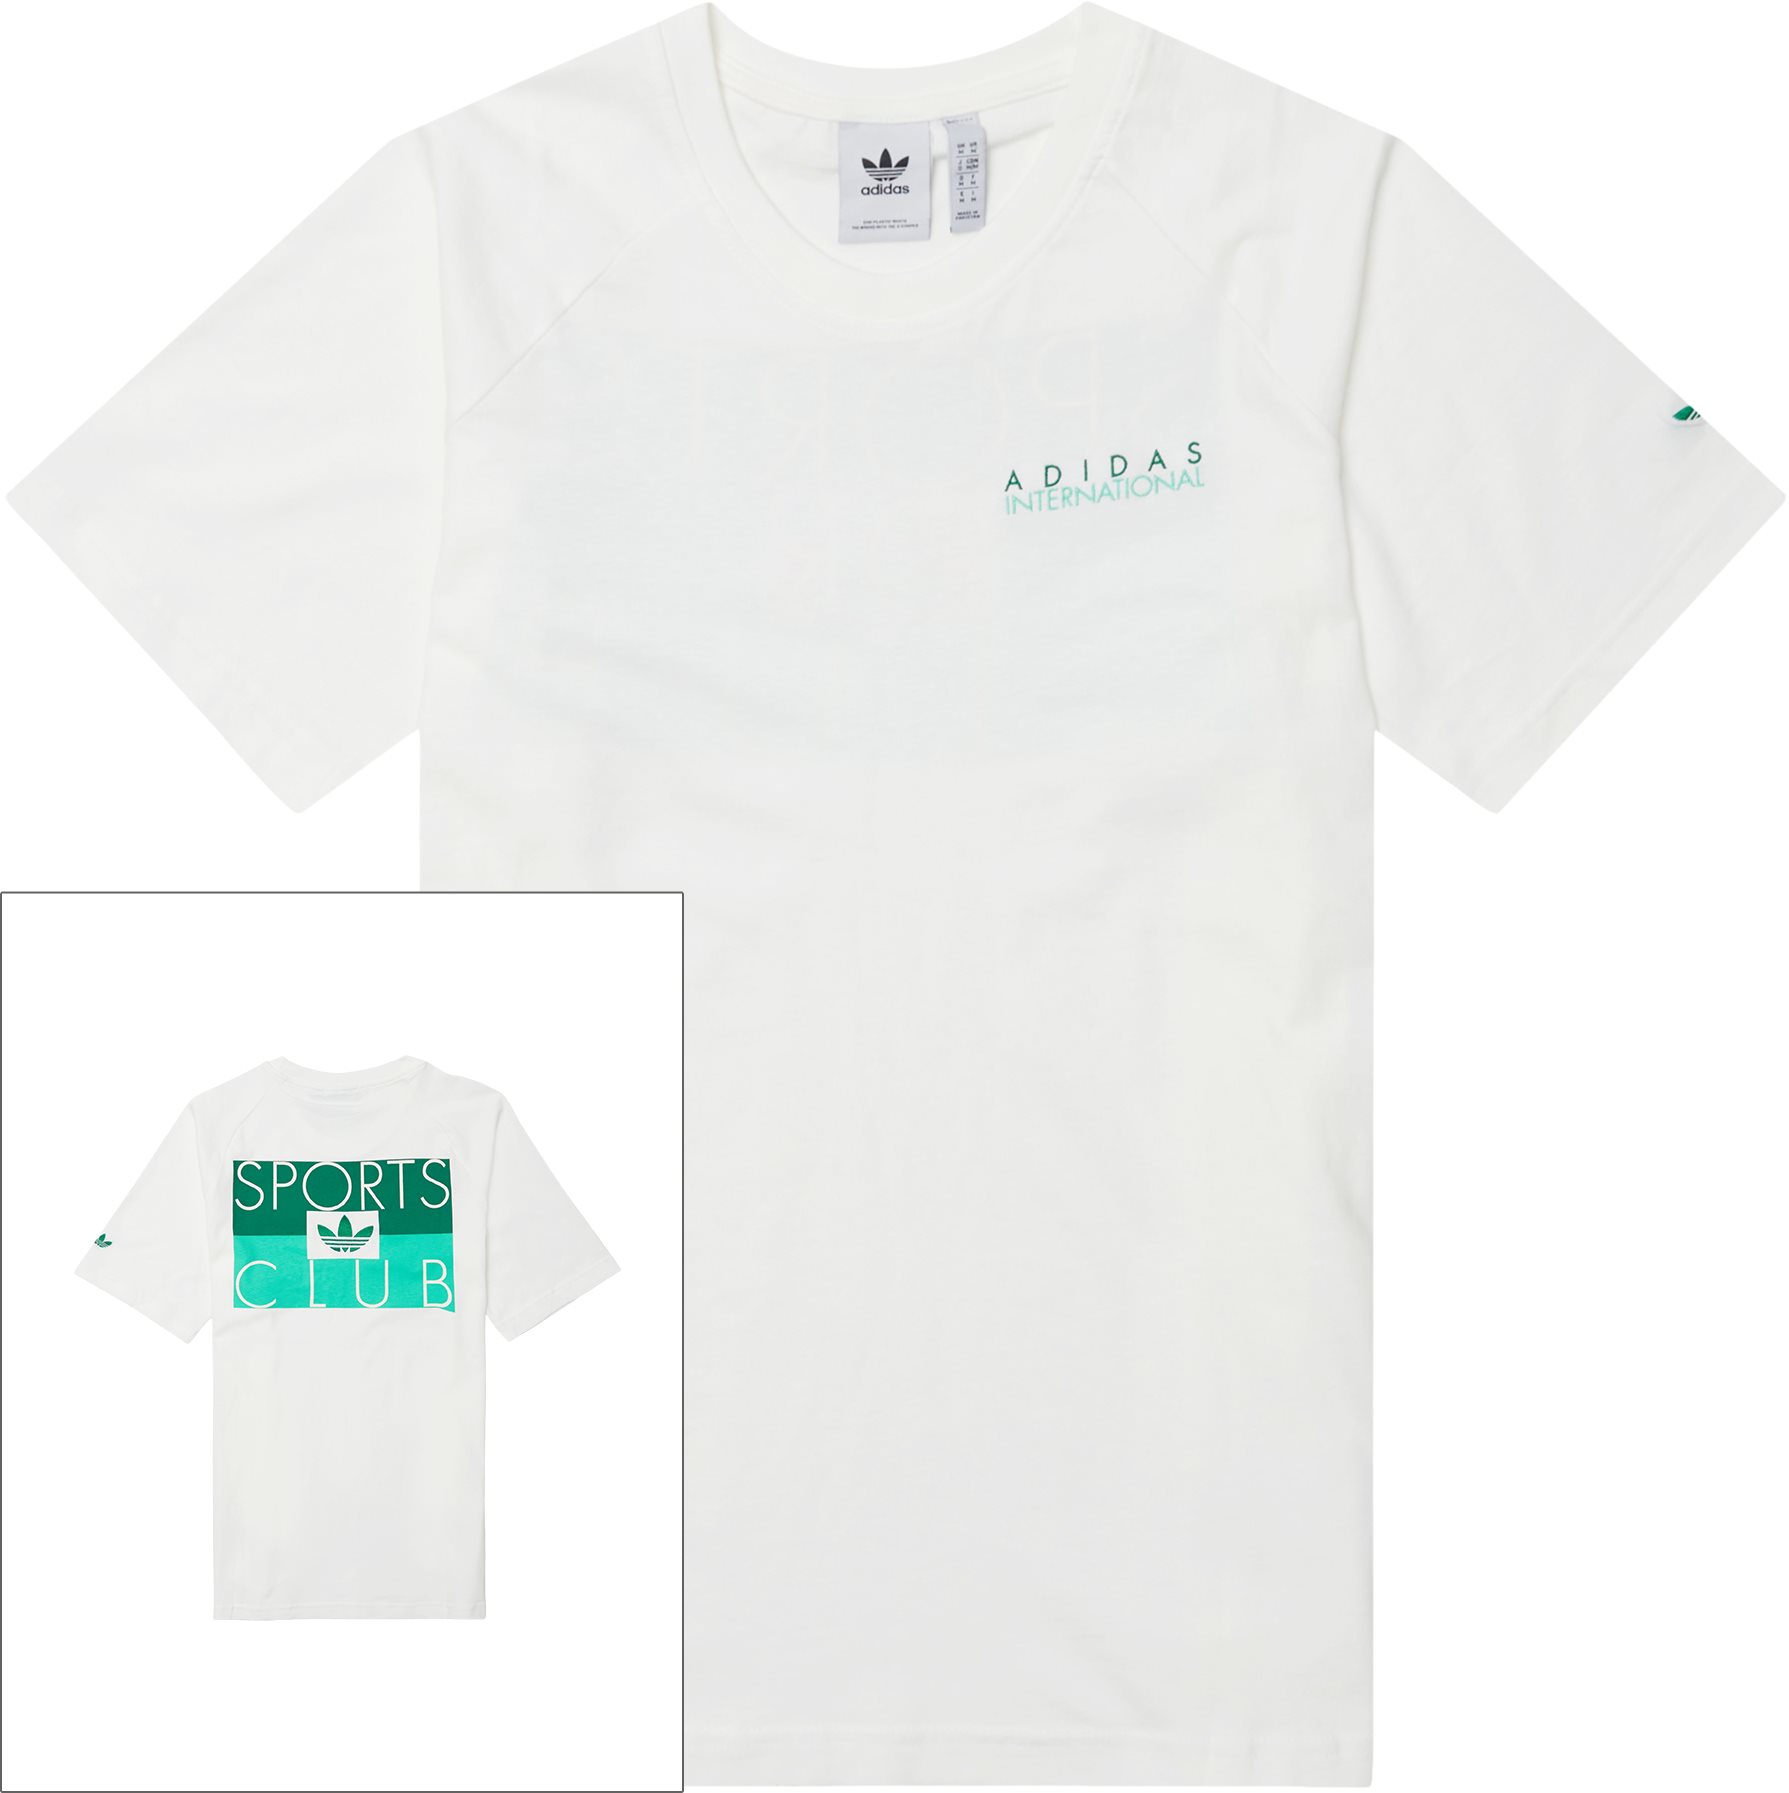 Sports Club Tee - T-shirts - Regular fit - White